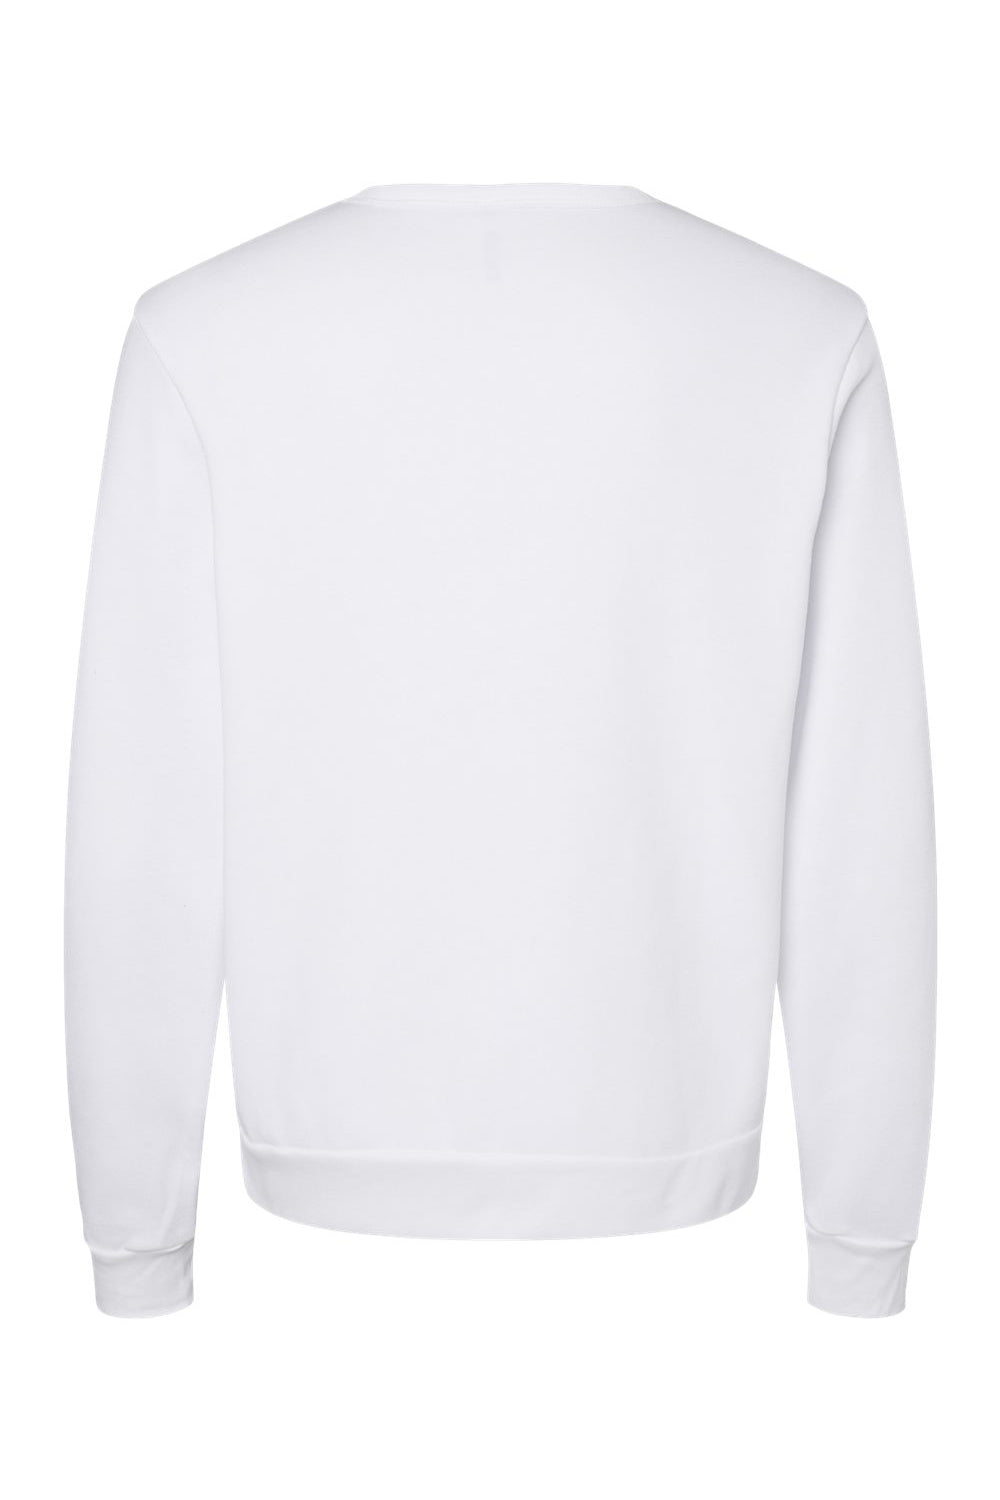 Bella + Canvas 3911 Mens Classic Crewneck Sweatshirt White Flat Back